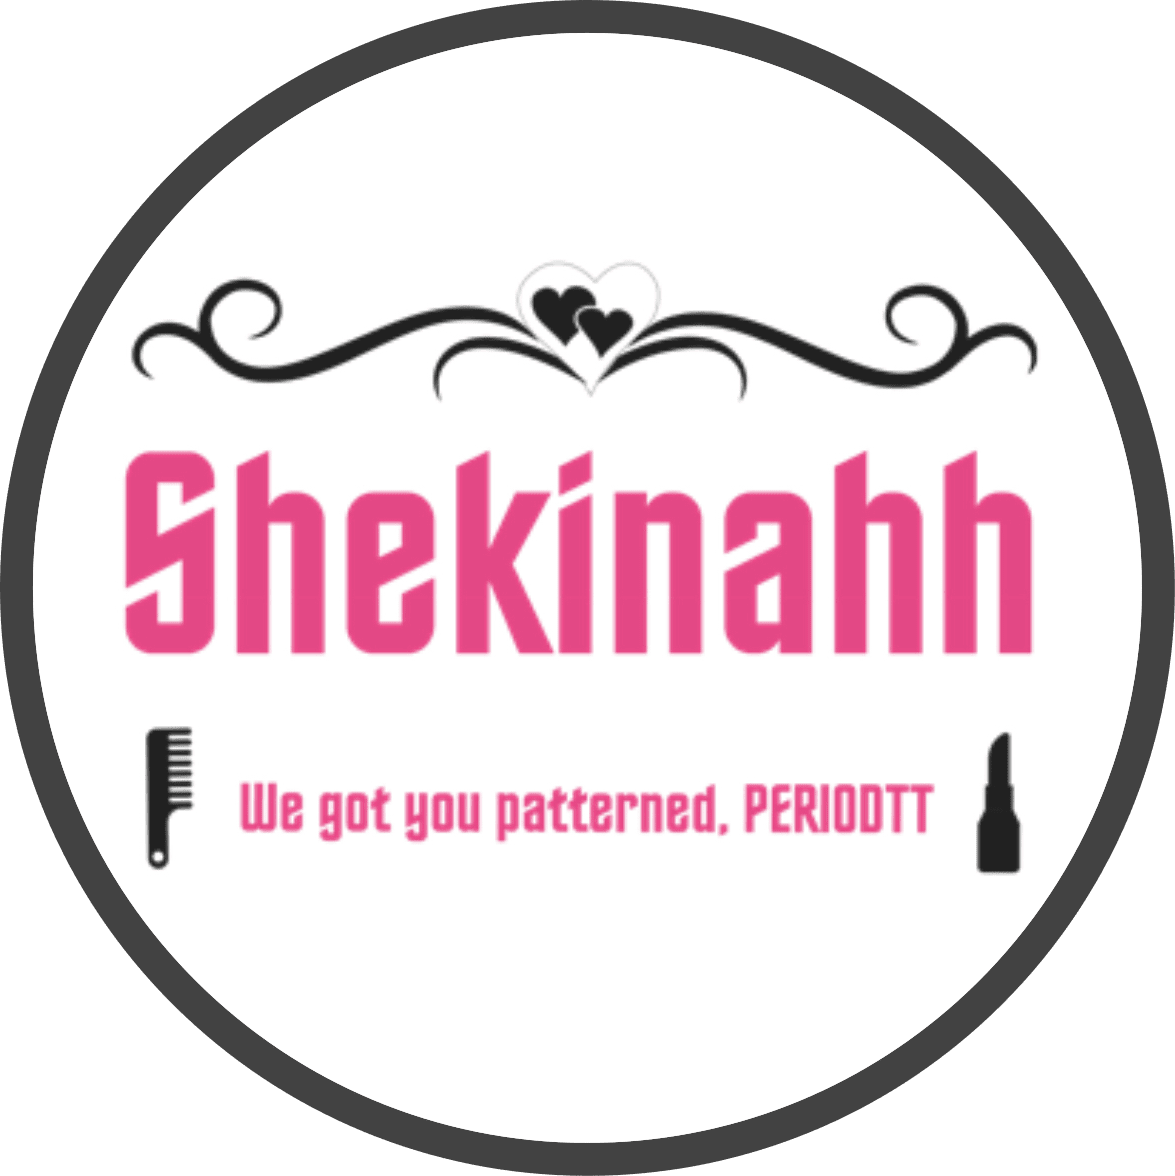 Shekinahh